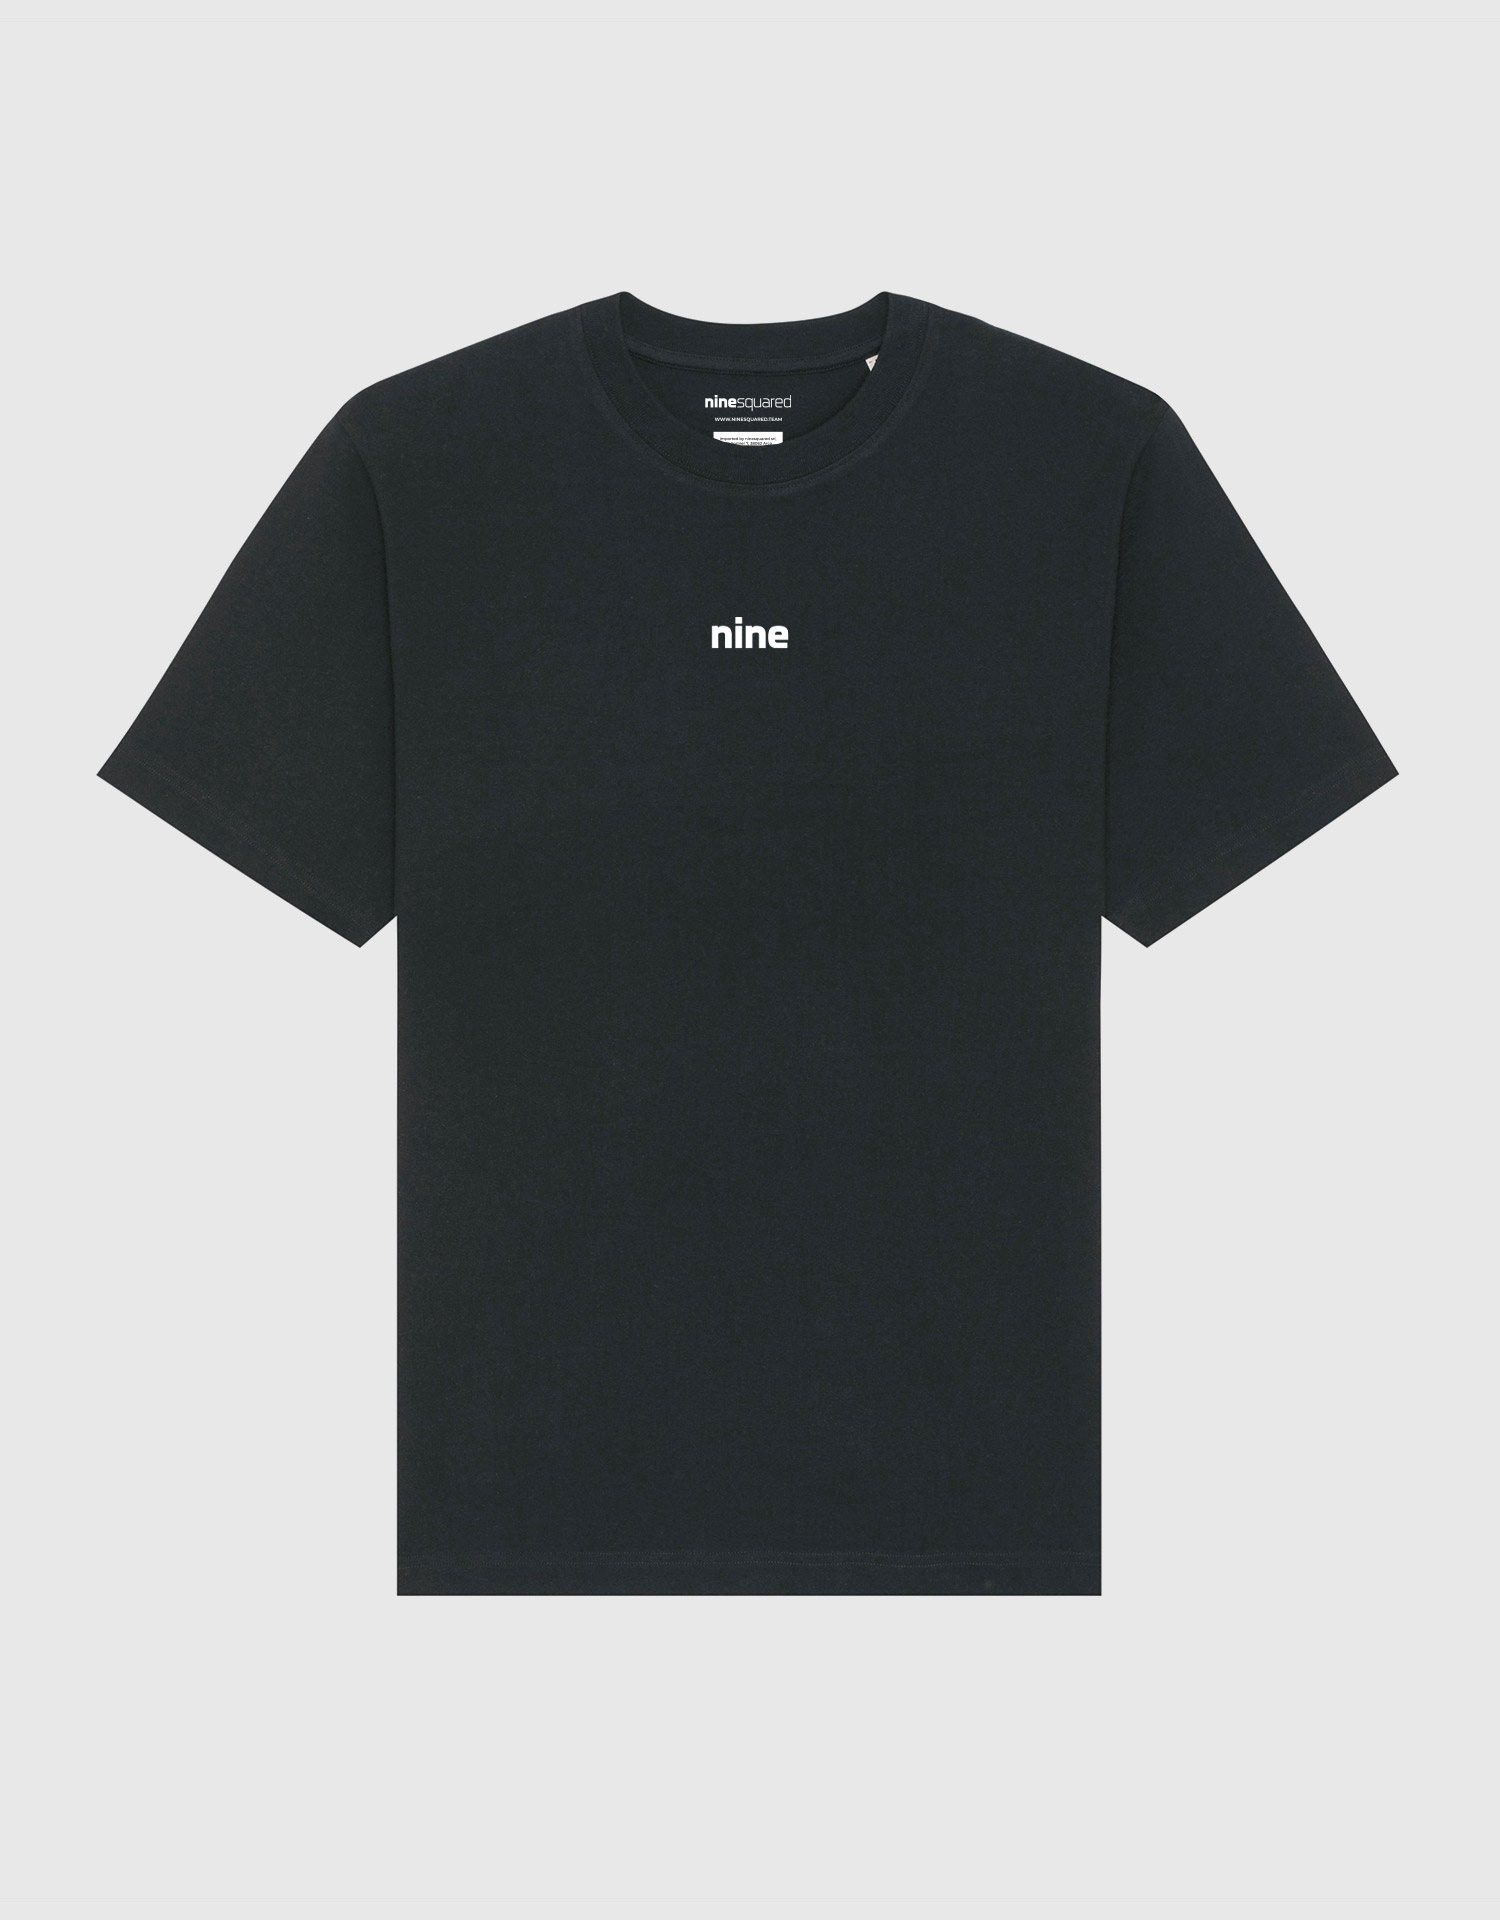 ninesquared-t-shirt-xxxl-black-front